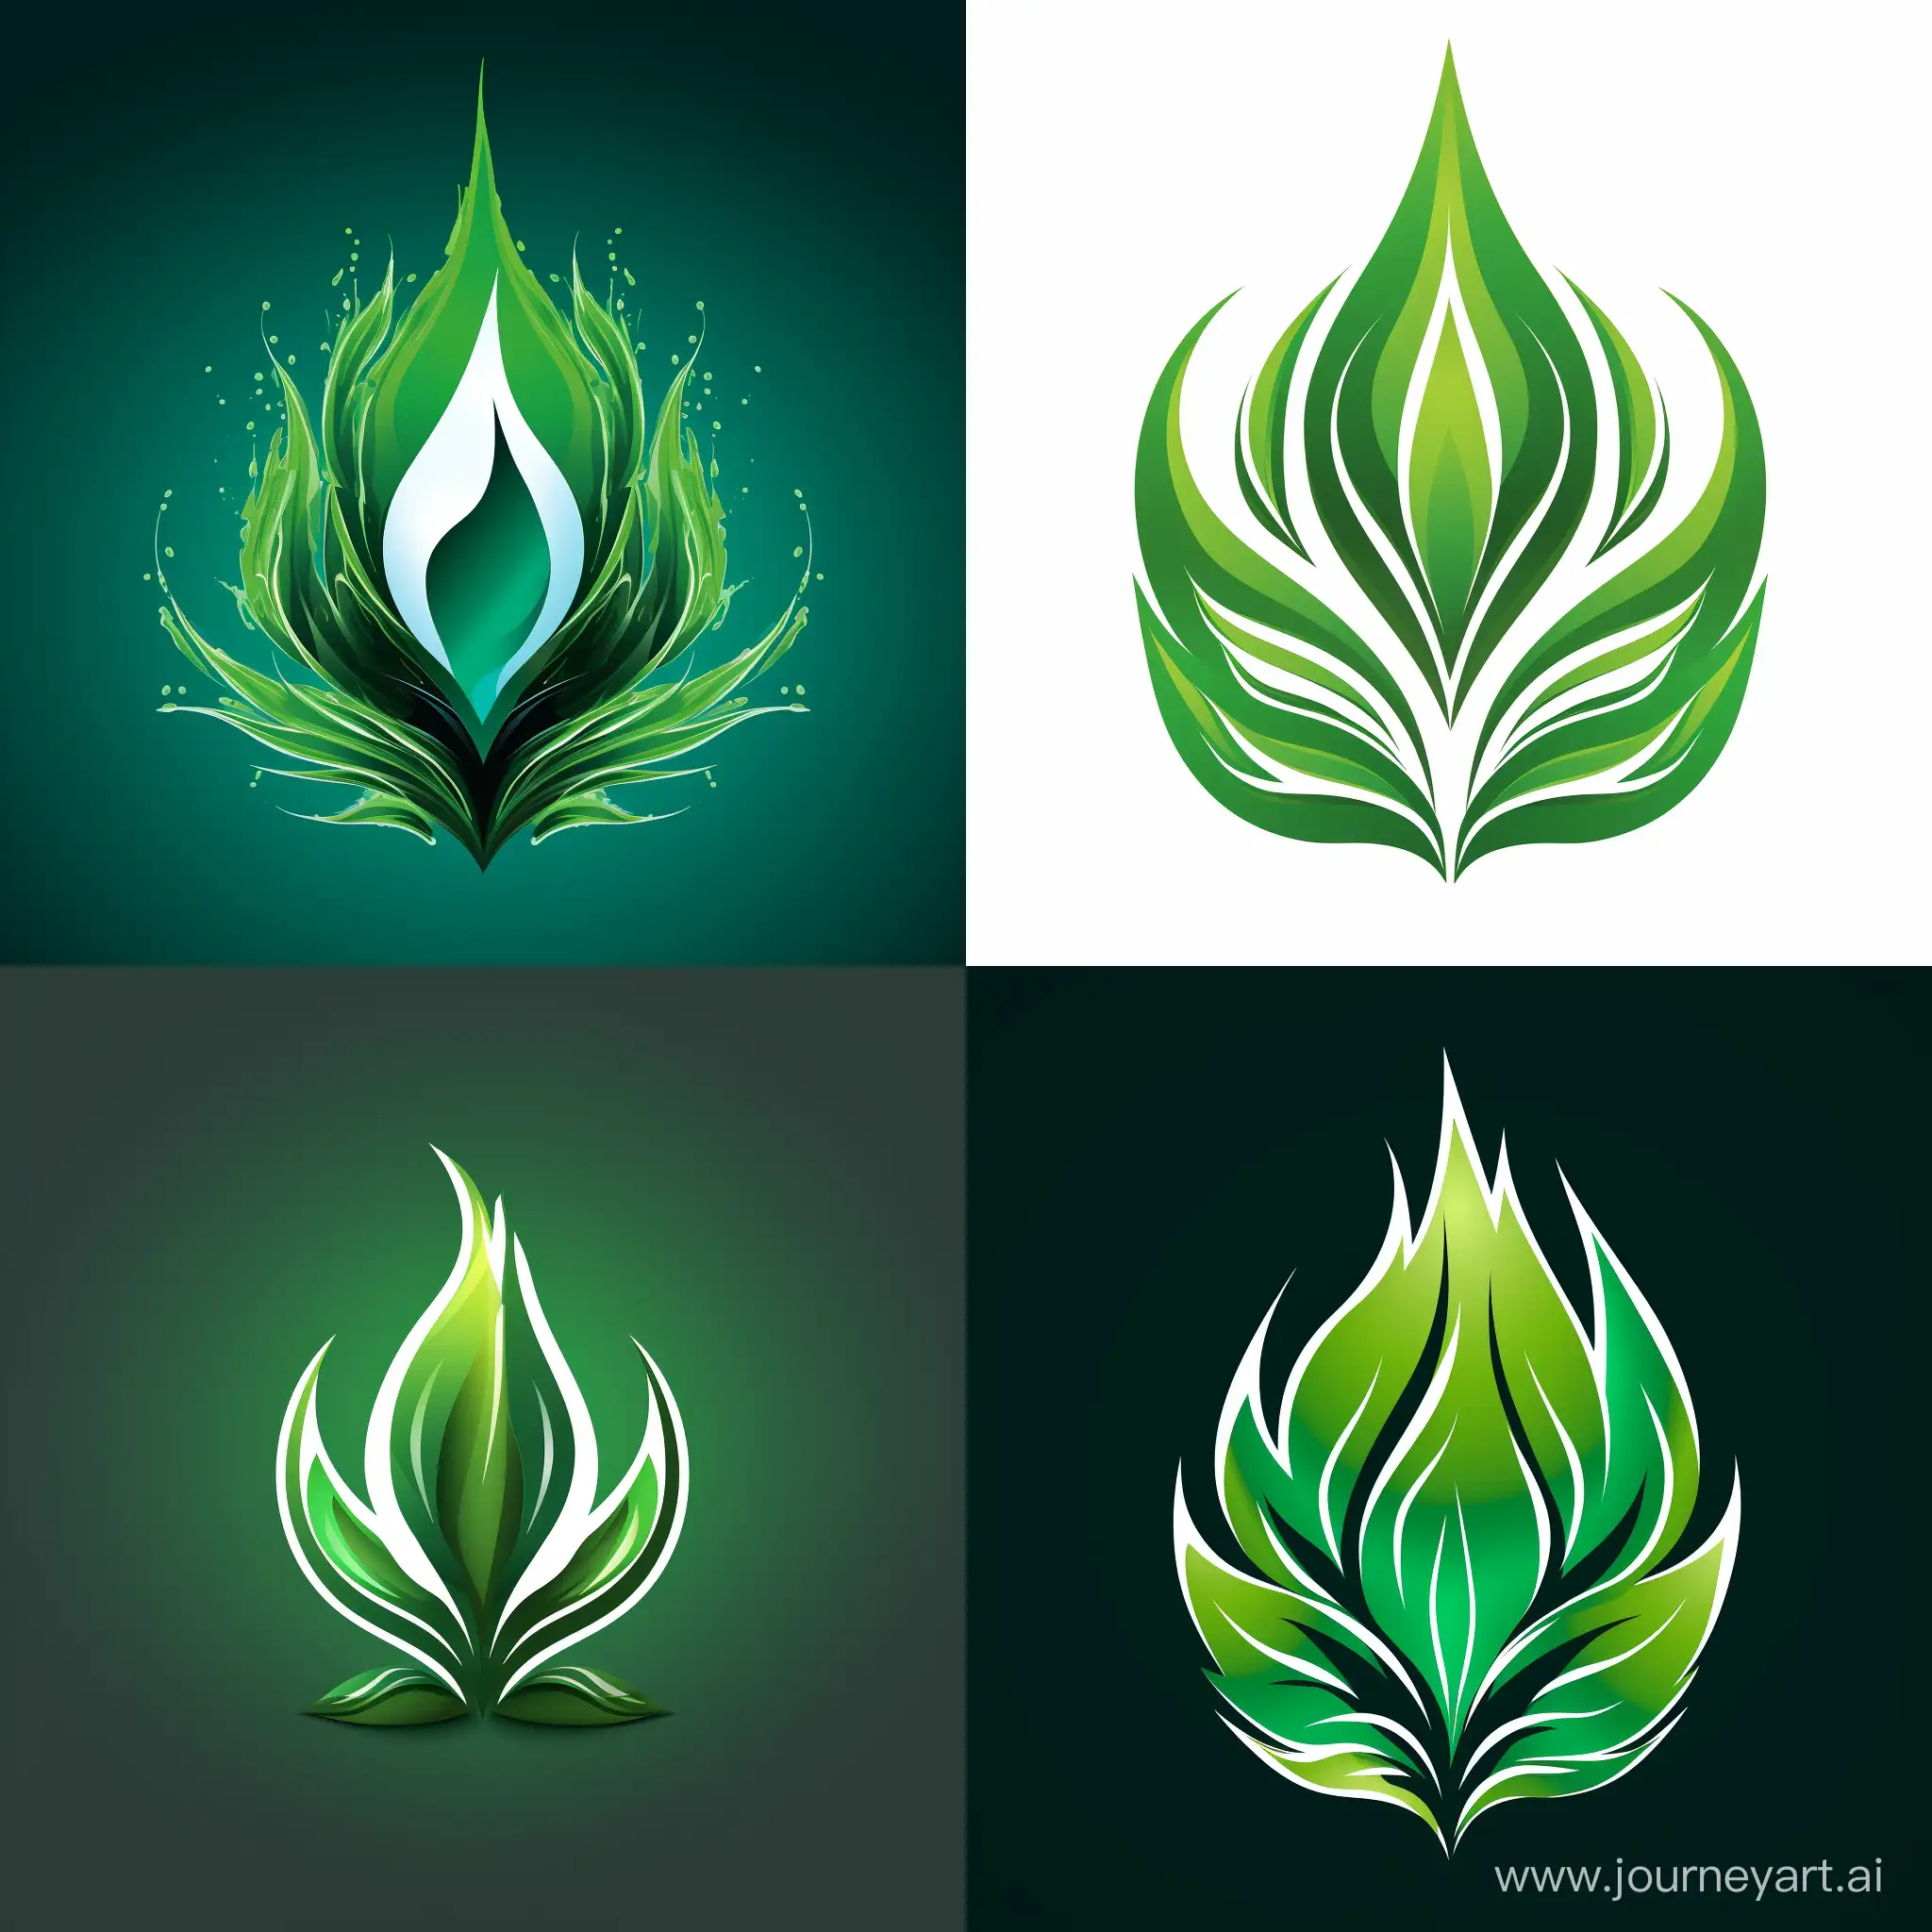 Monochrome-Vector-Image-Green-Leaves-Transform-Gazprom-Logo